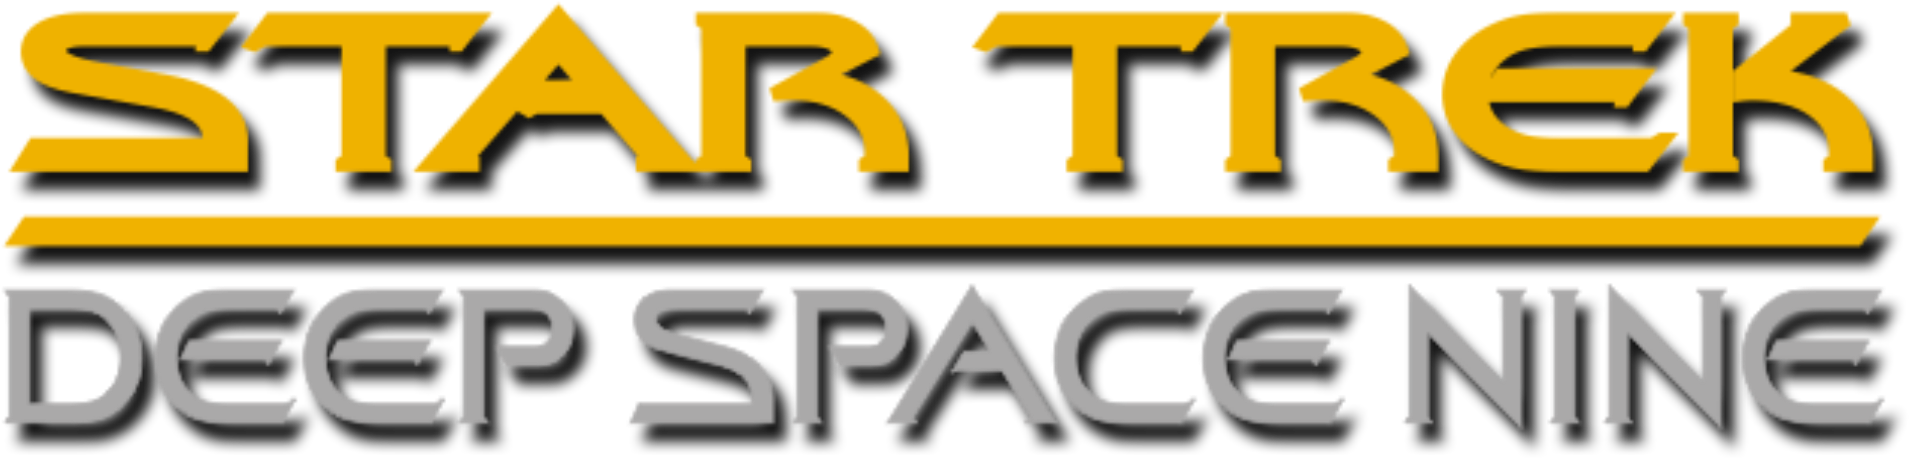 Star Trek Ds9 Logo By Miss Neta Watsica Dds - Star Trek Deep Space Nine Logo (2000x545), Png Download